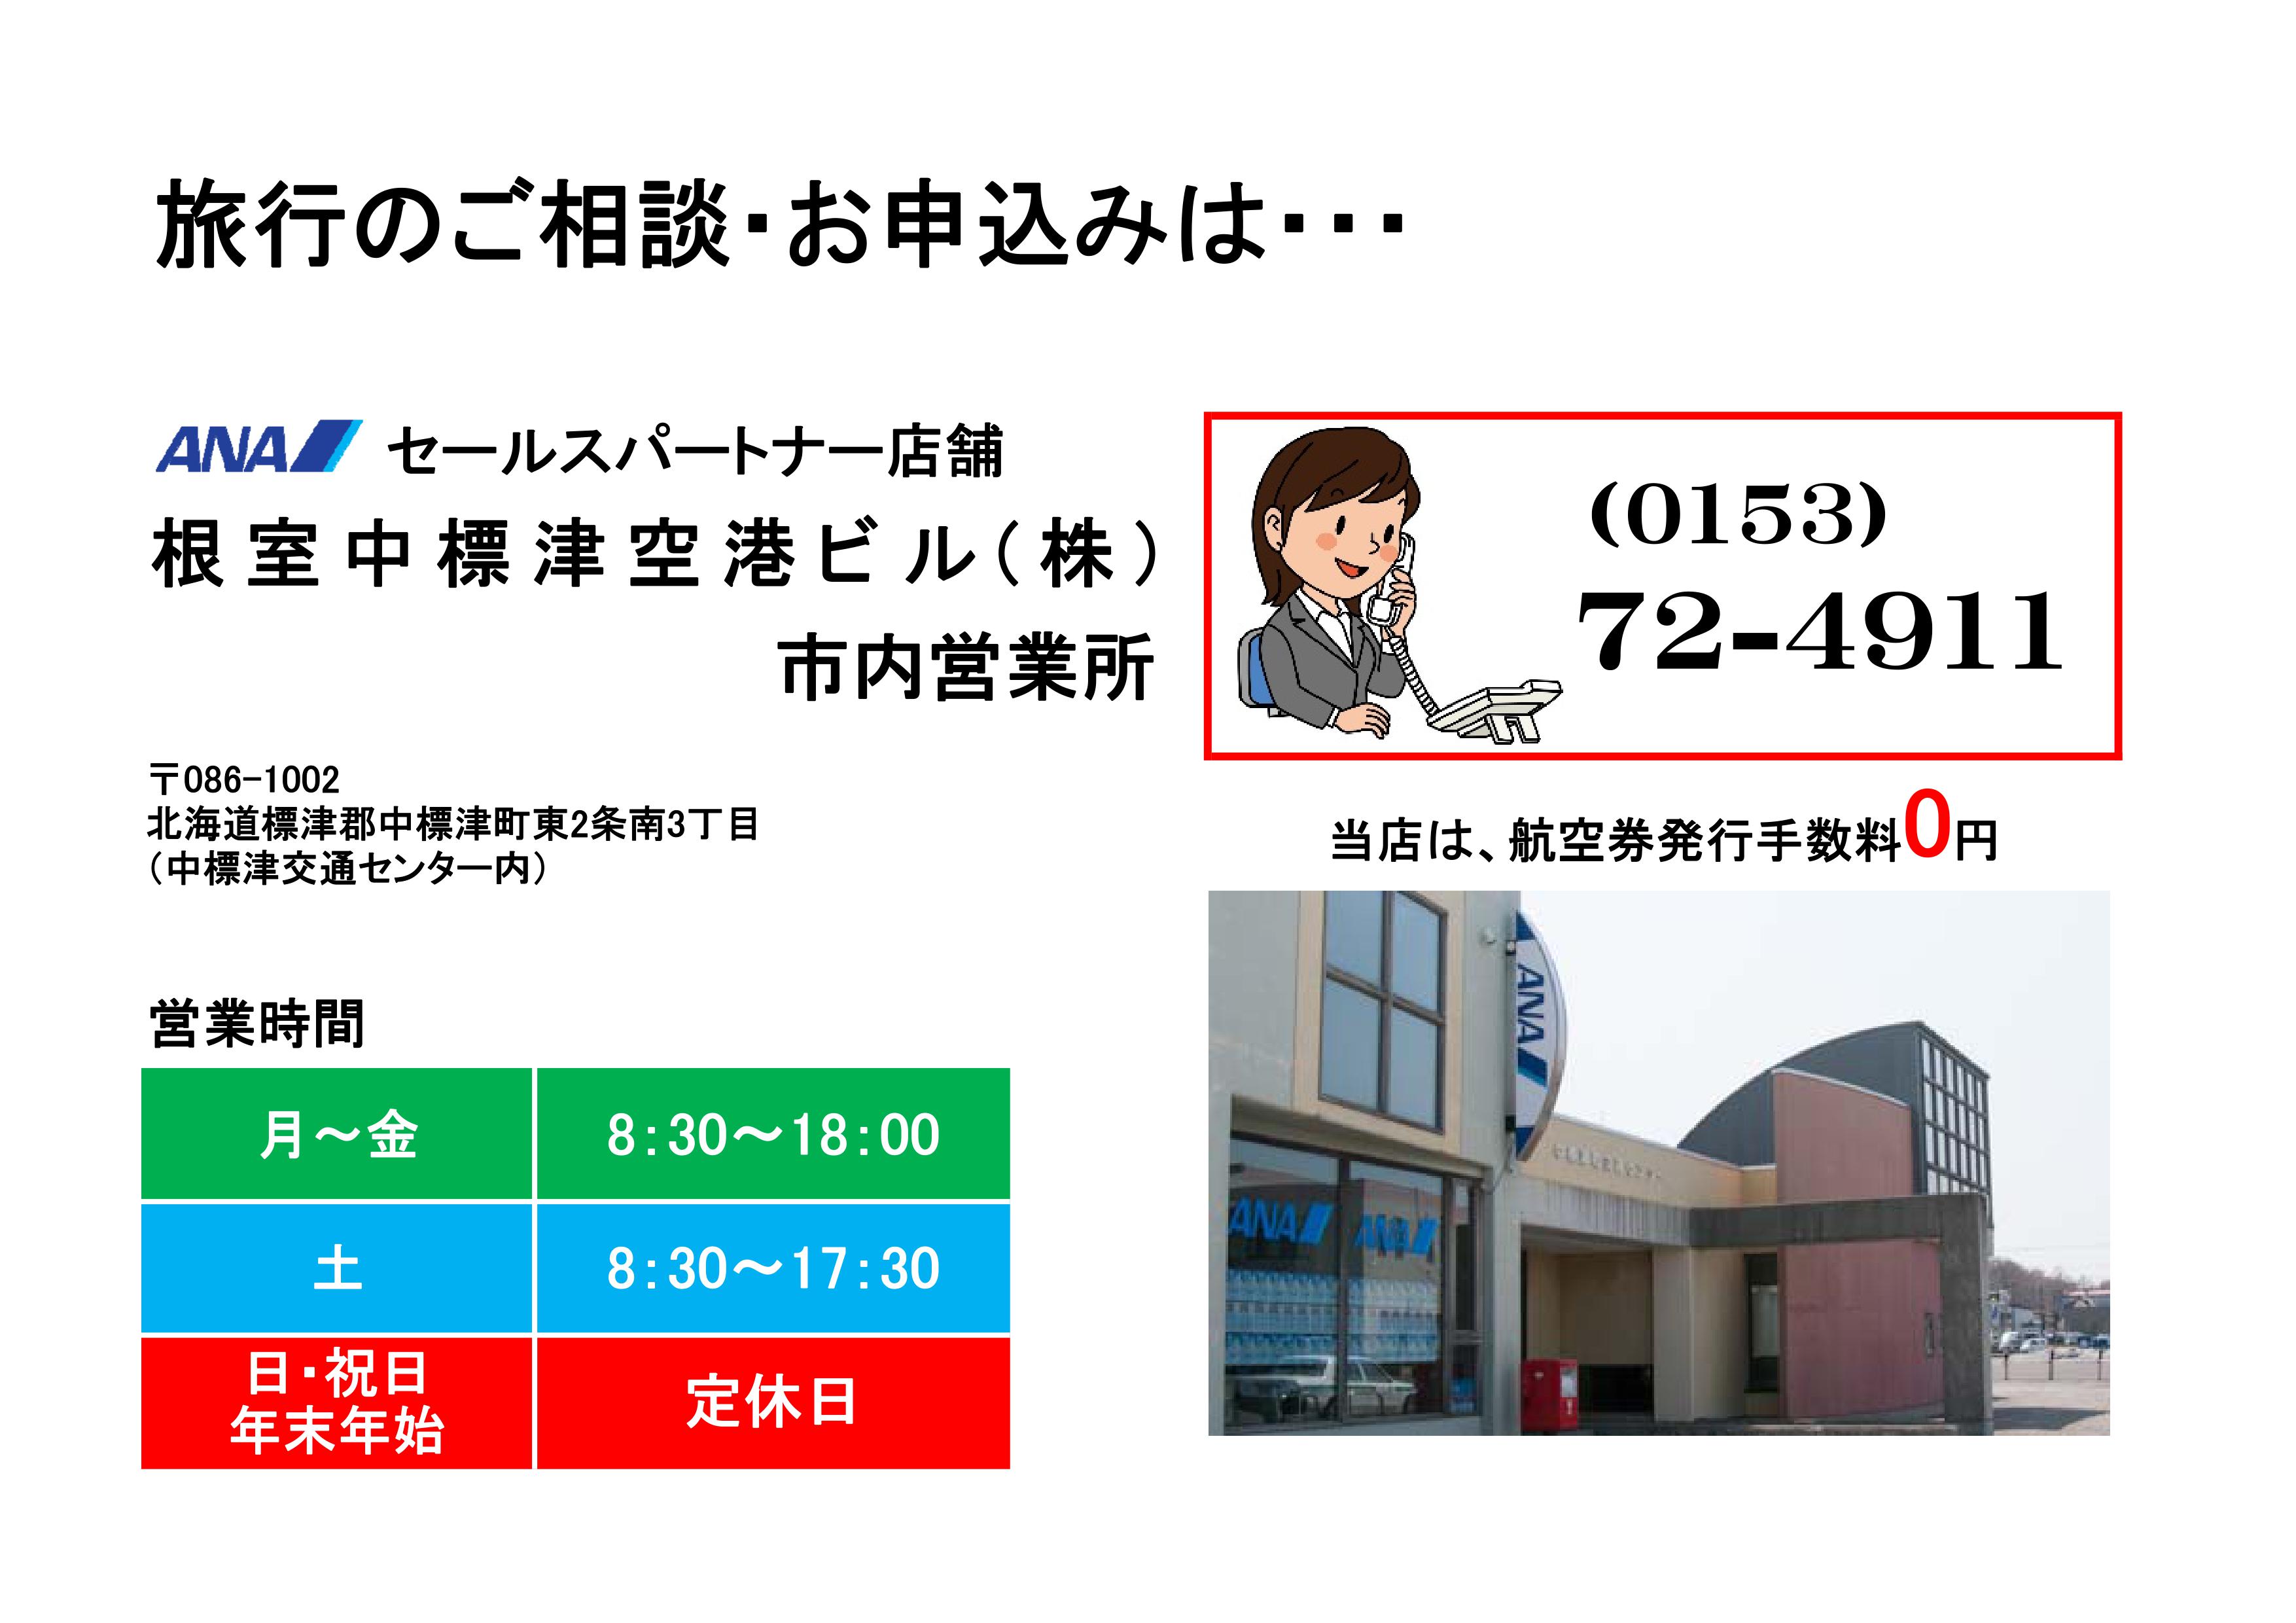 http://www.nakashibetsu-airport.jp/%E5%96%B6%E6%A5%AD%E6%99%82%E9%96%93%E6%8E%B2%E8%BC%89.jpg